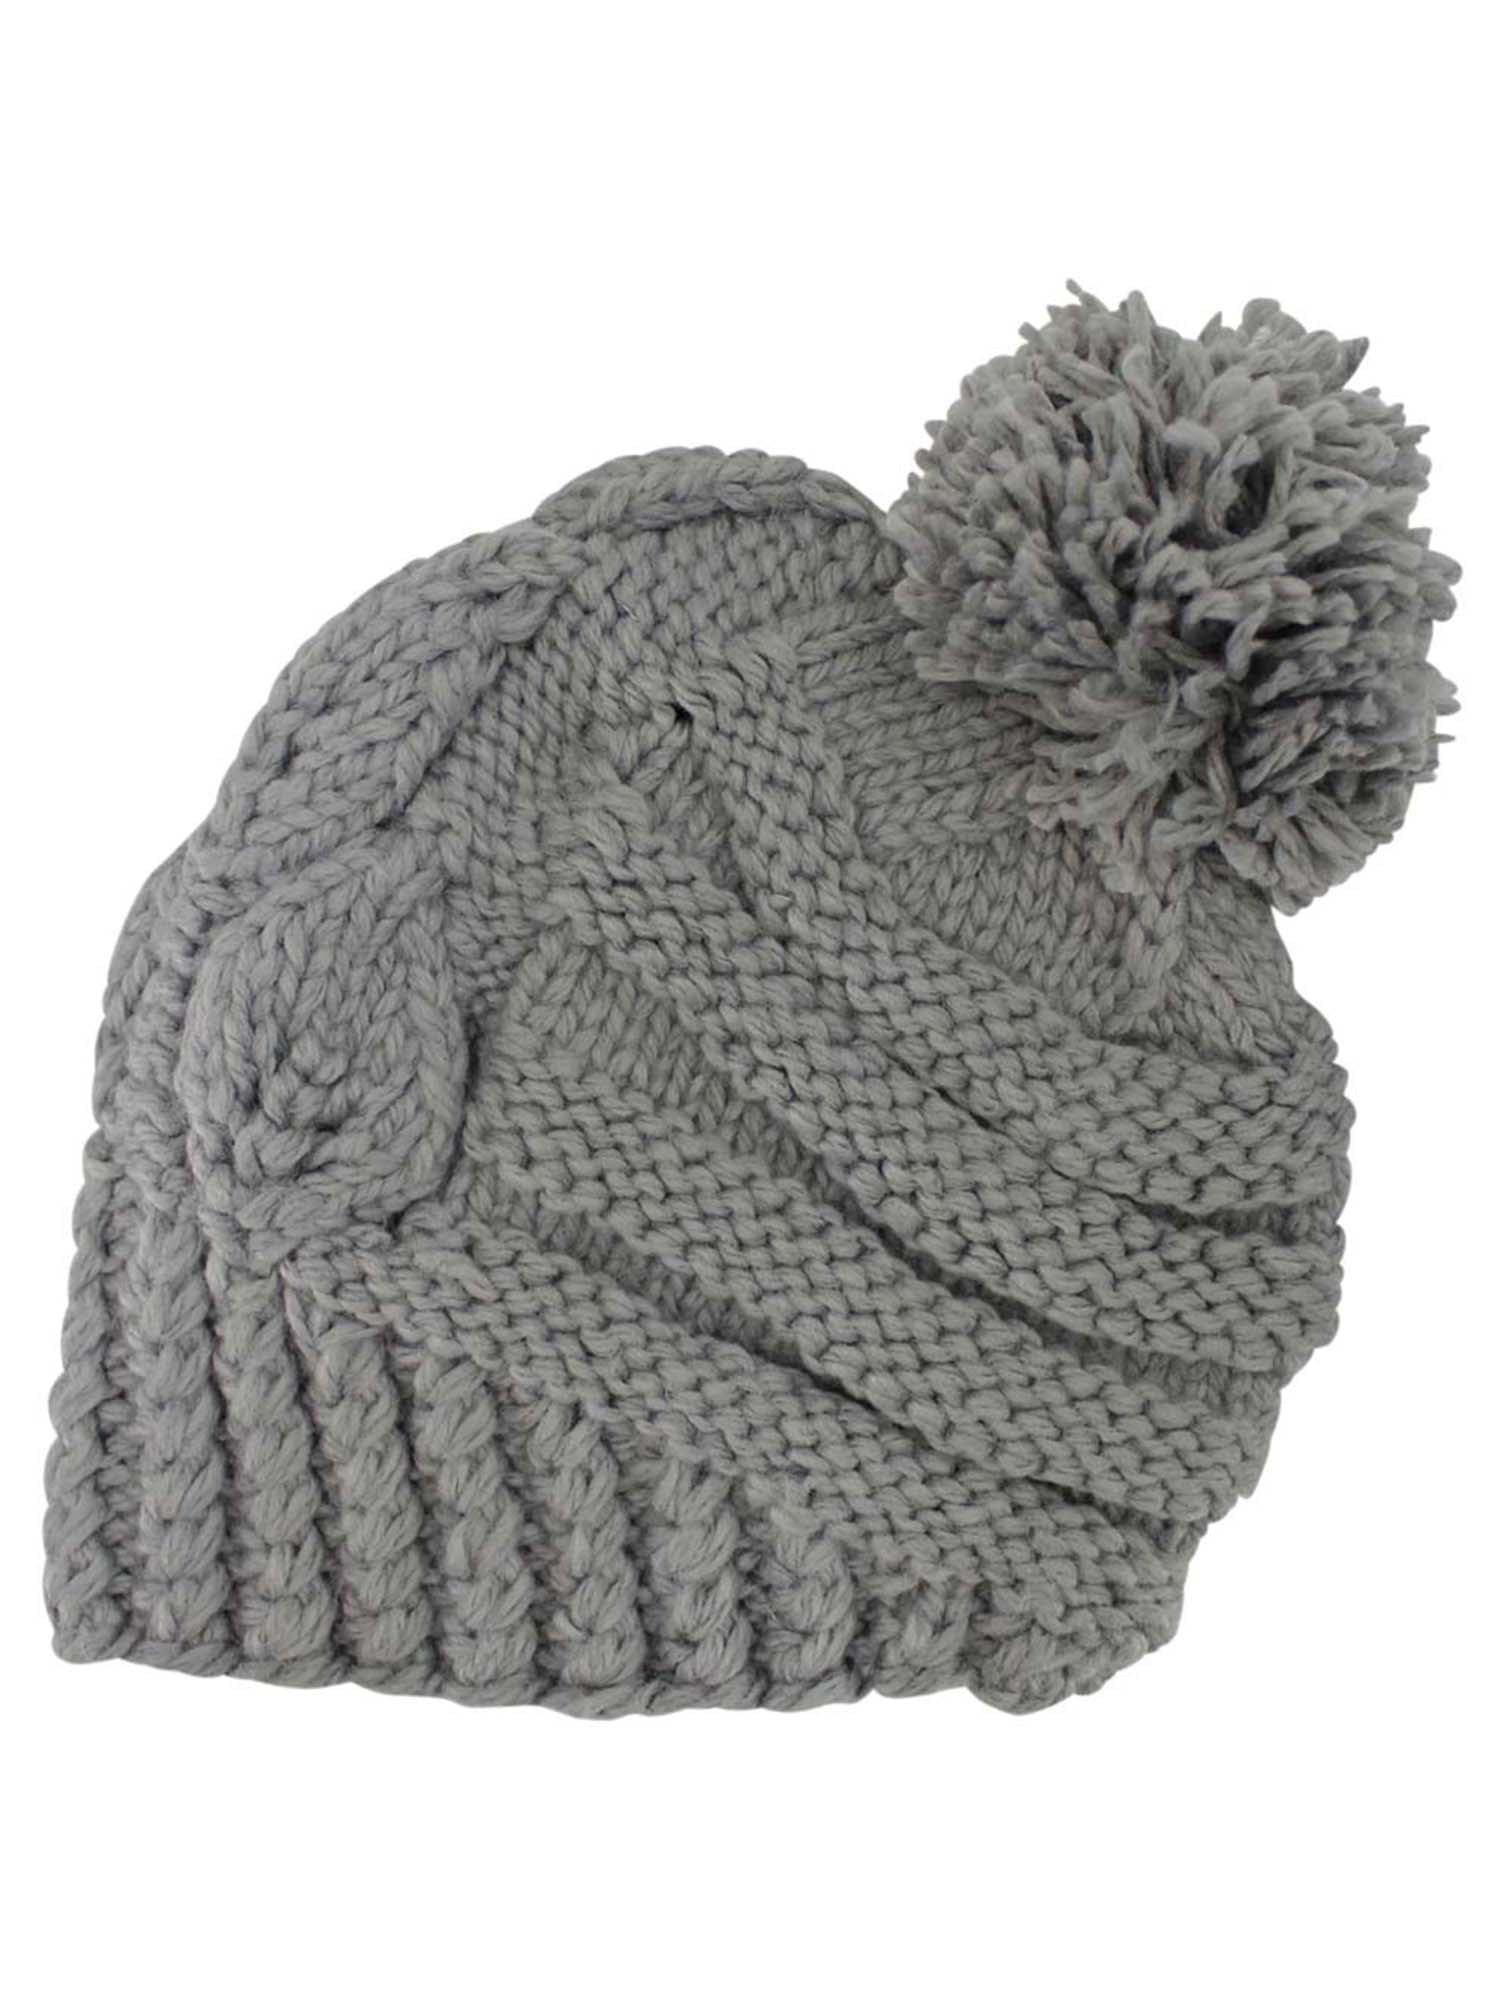 Grey Slouchy Winter Cable Knit Beanie Hat With Pom Pom